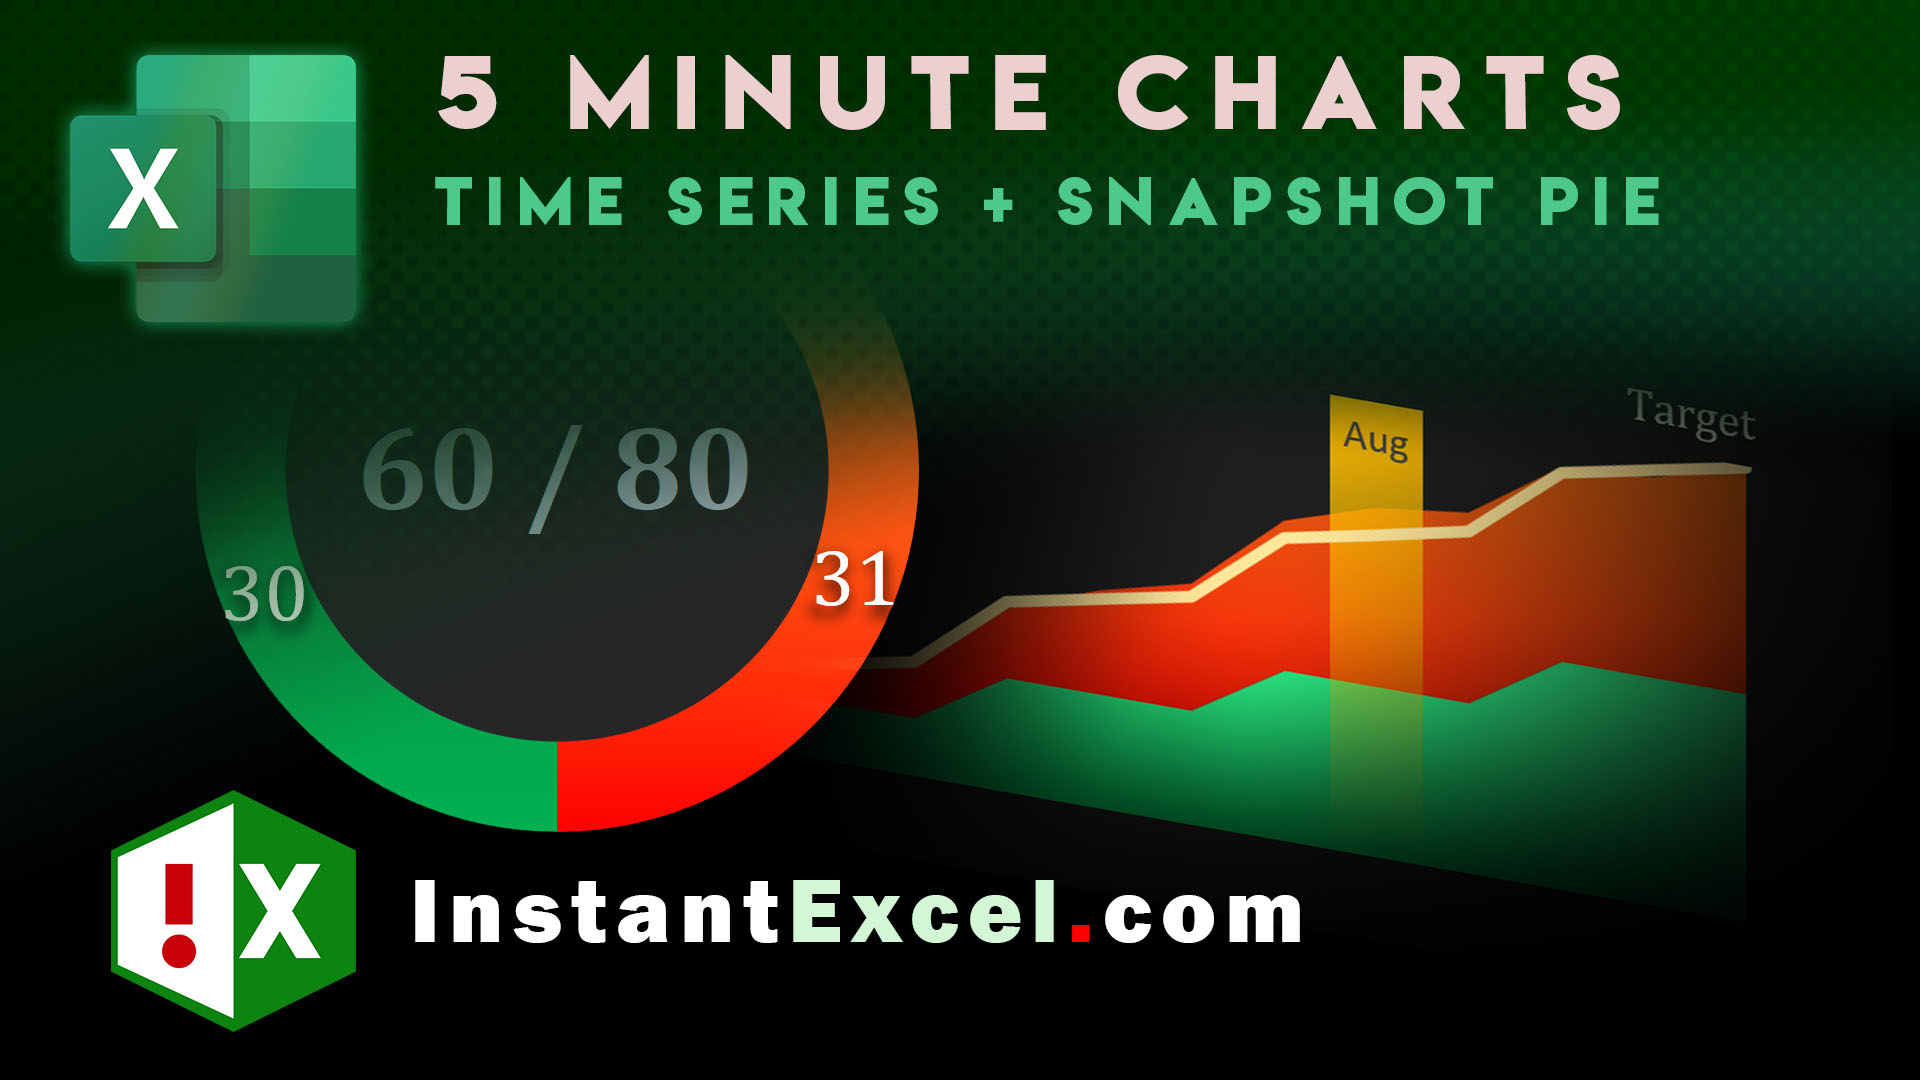 Video: Time series + Snapshot Pie Chart